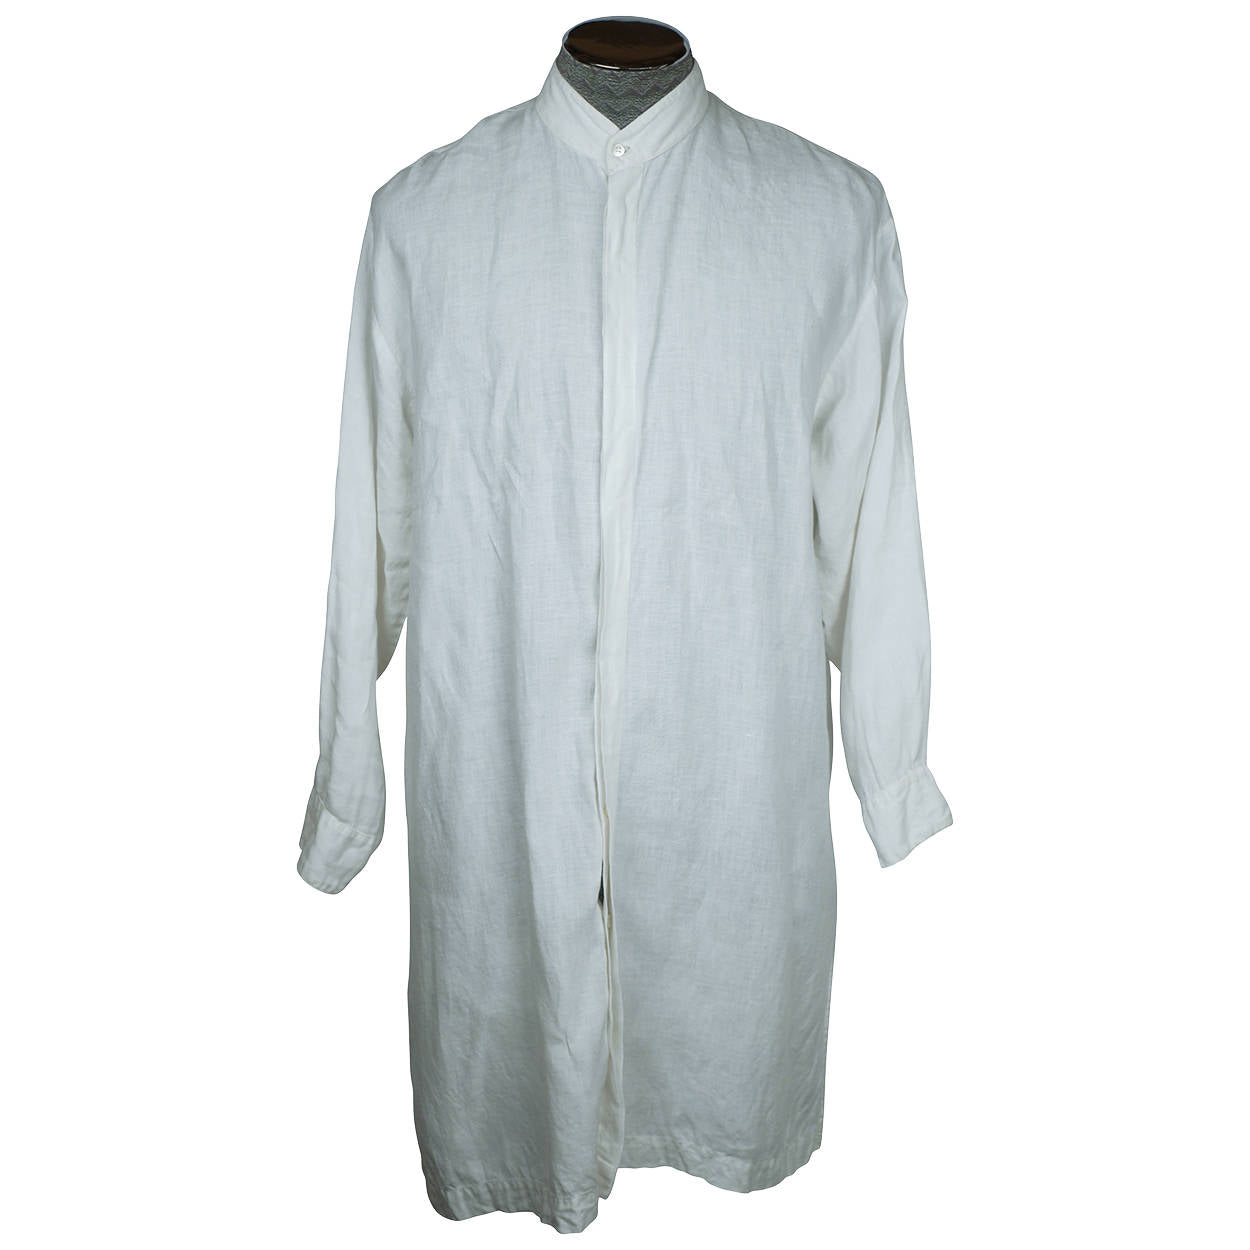 Eskandar Mens Night Shirt White Linen Made in England Size 1